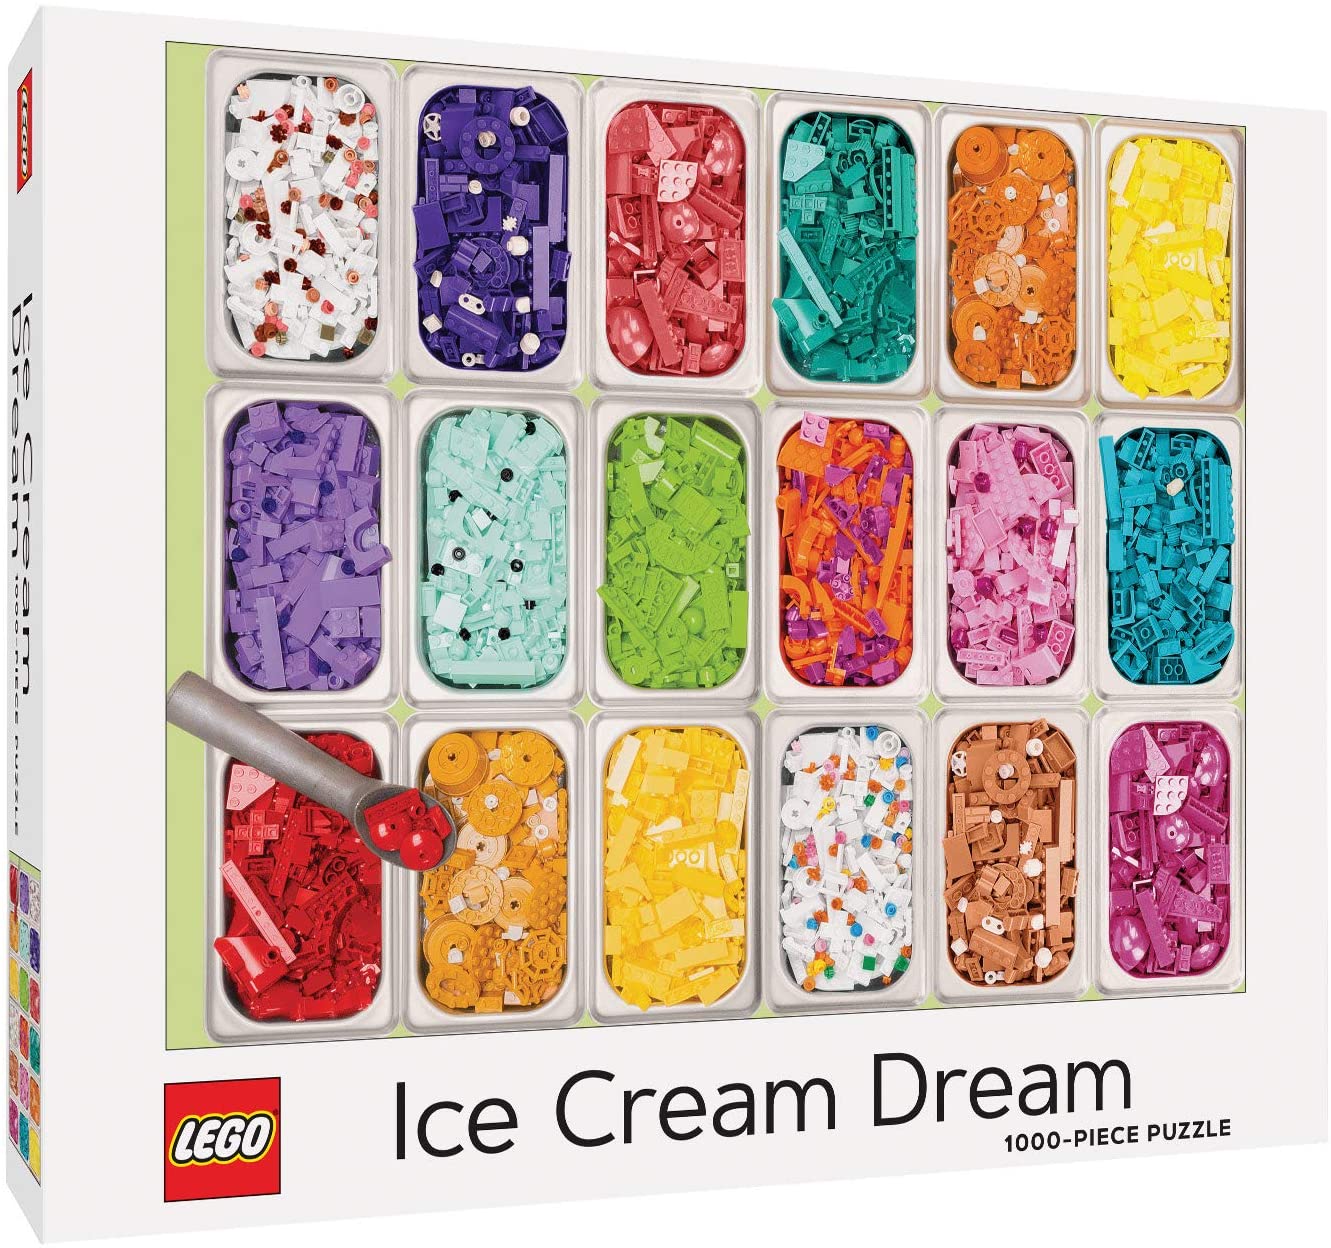 1000-Piece LEGO Ice Cream Dream Piece Puzzle $9.99 + Free Shipping w/ Prime or $25+